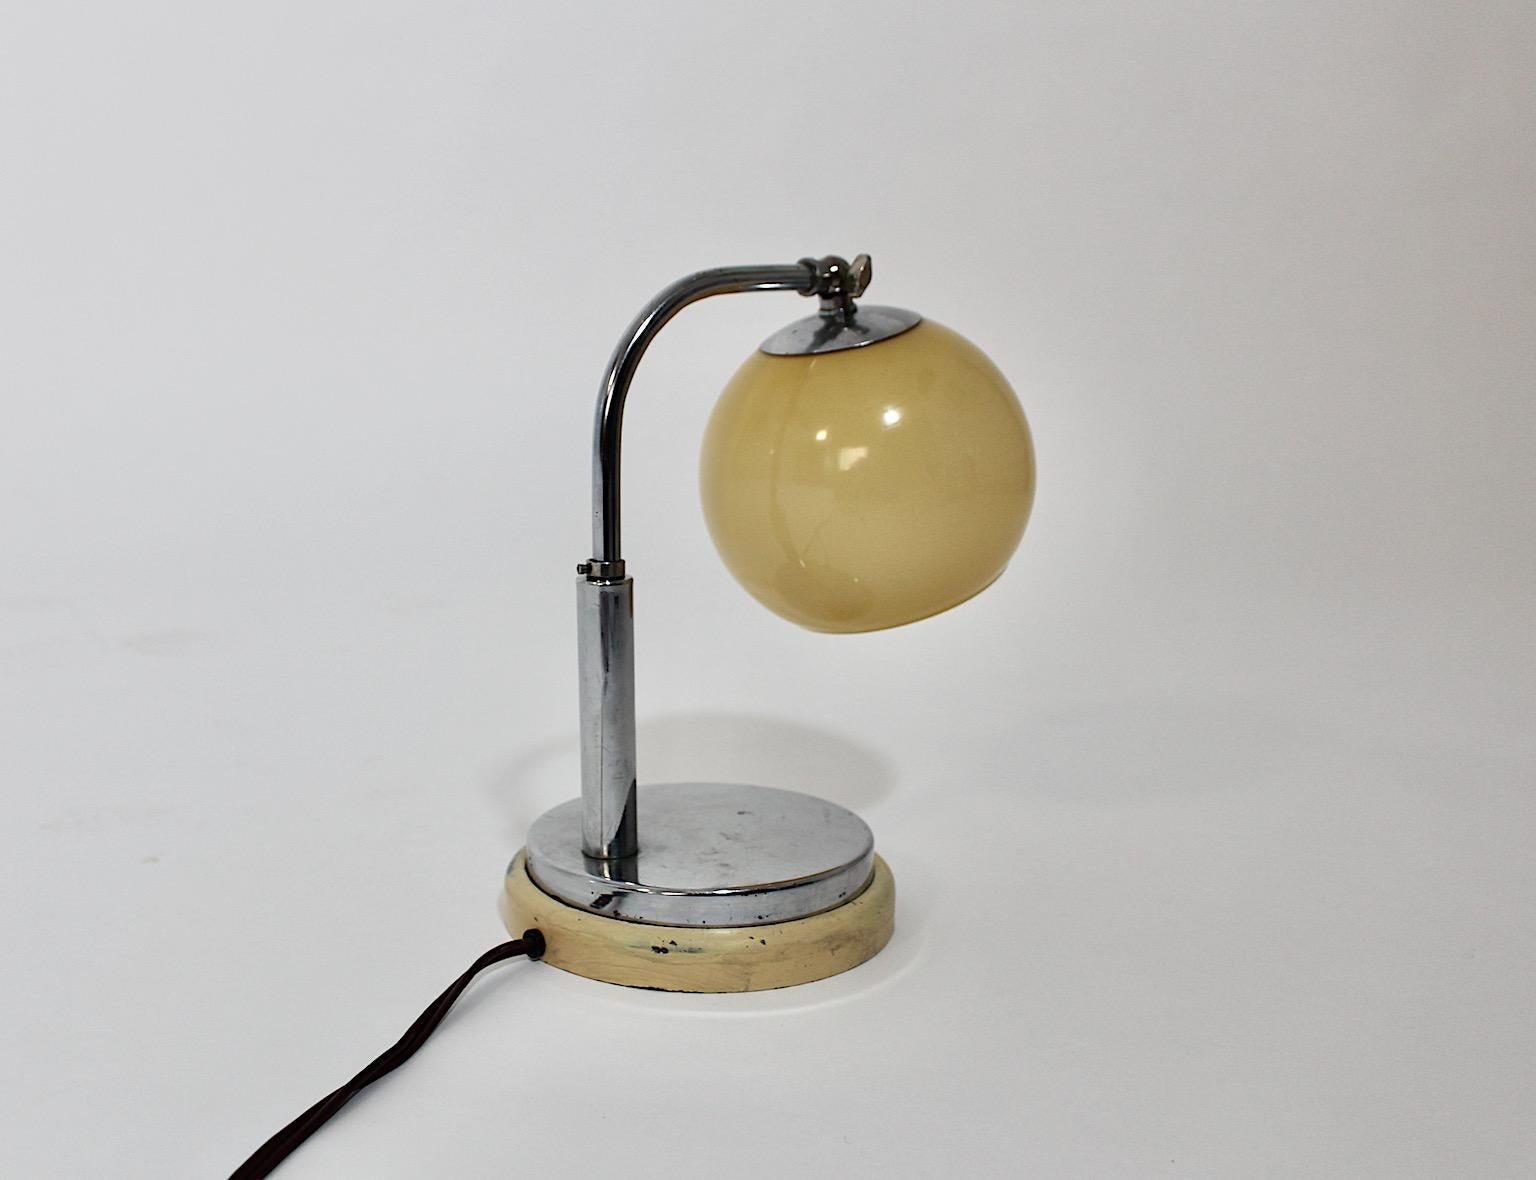 Bauhaus vintage table lamp or bedside lamp model Tastlicht by Marianne Brandt for Ruppelwerke 1920s Germany.
The name 